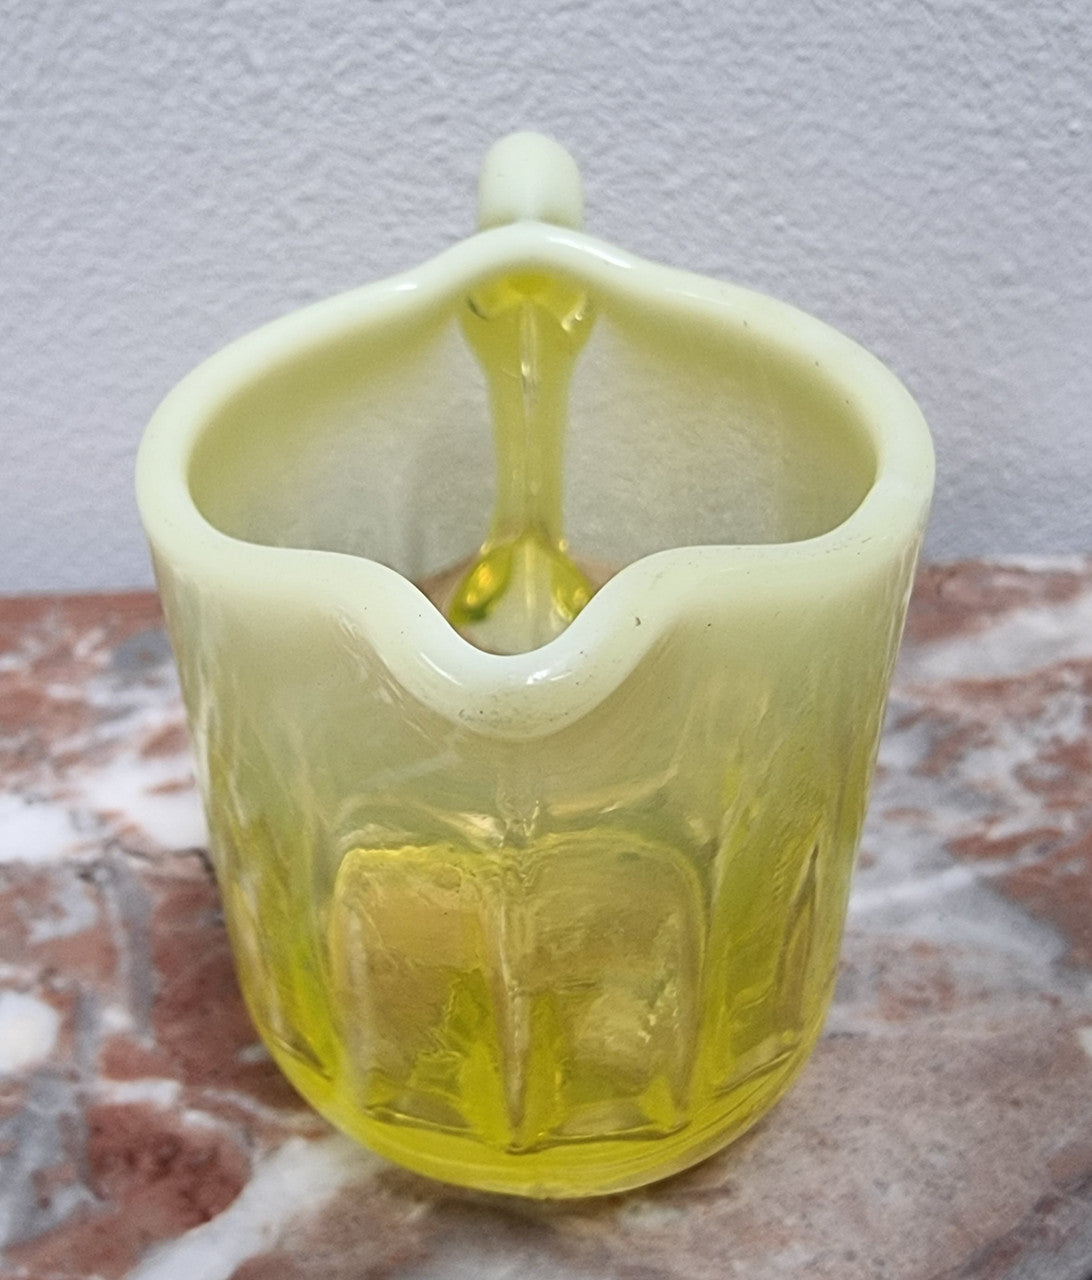 A fabulous rare Vaseline glass small jug and sugar bowl in good original condition.